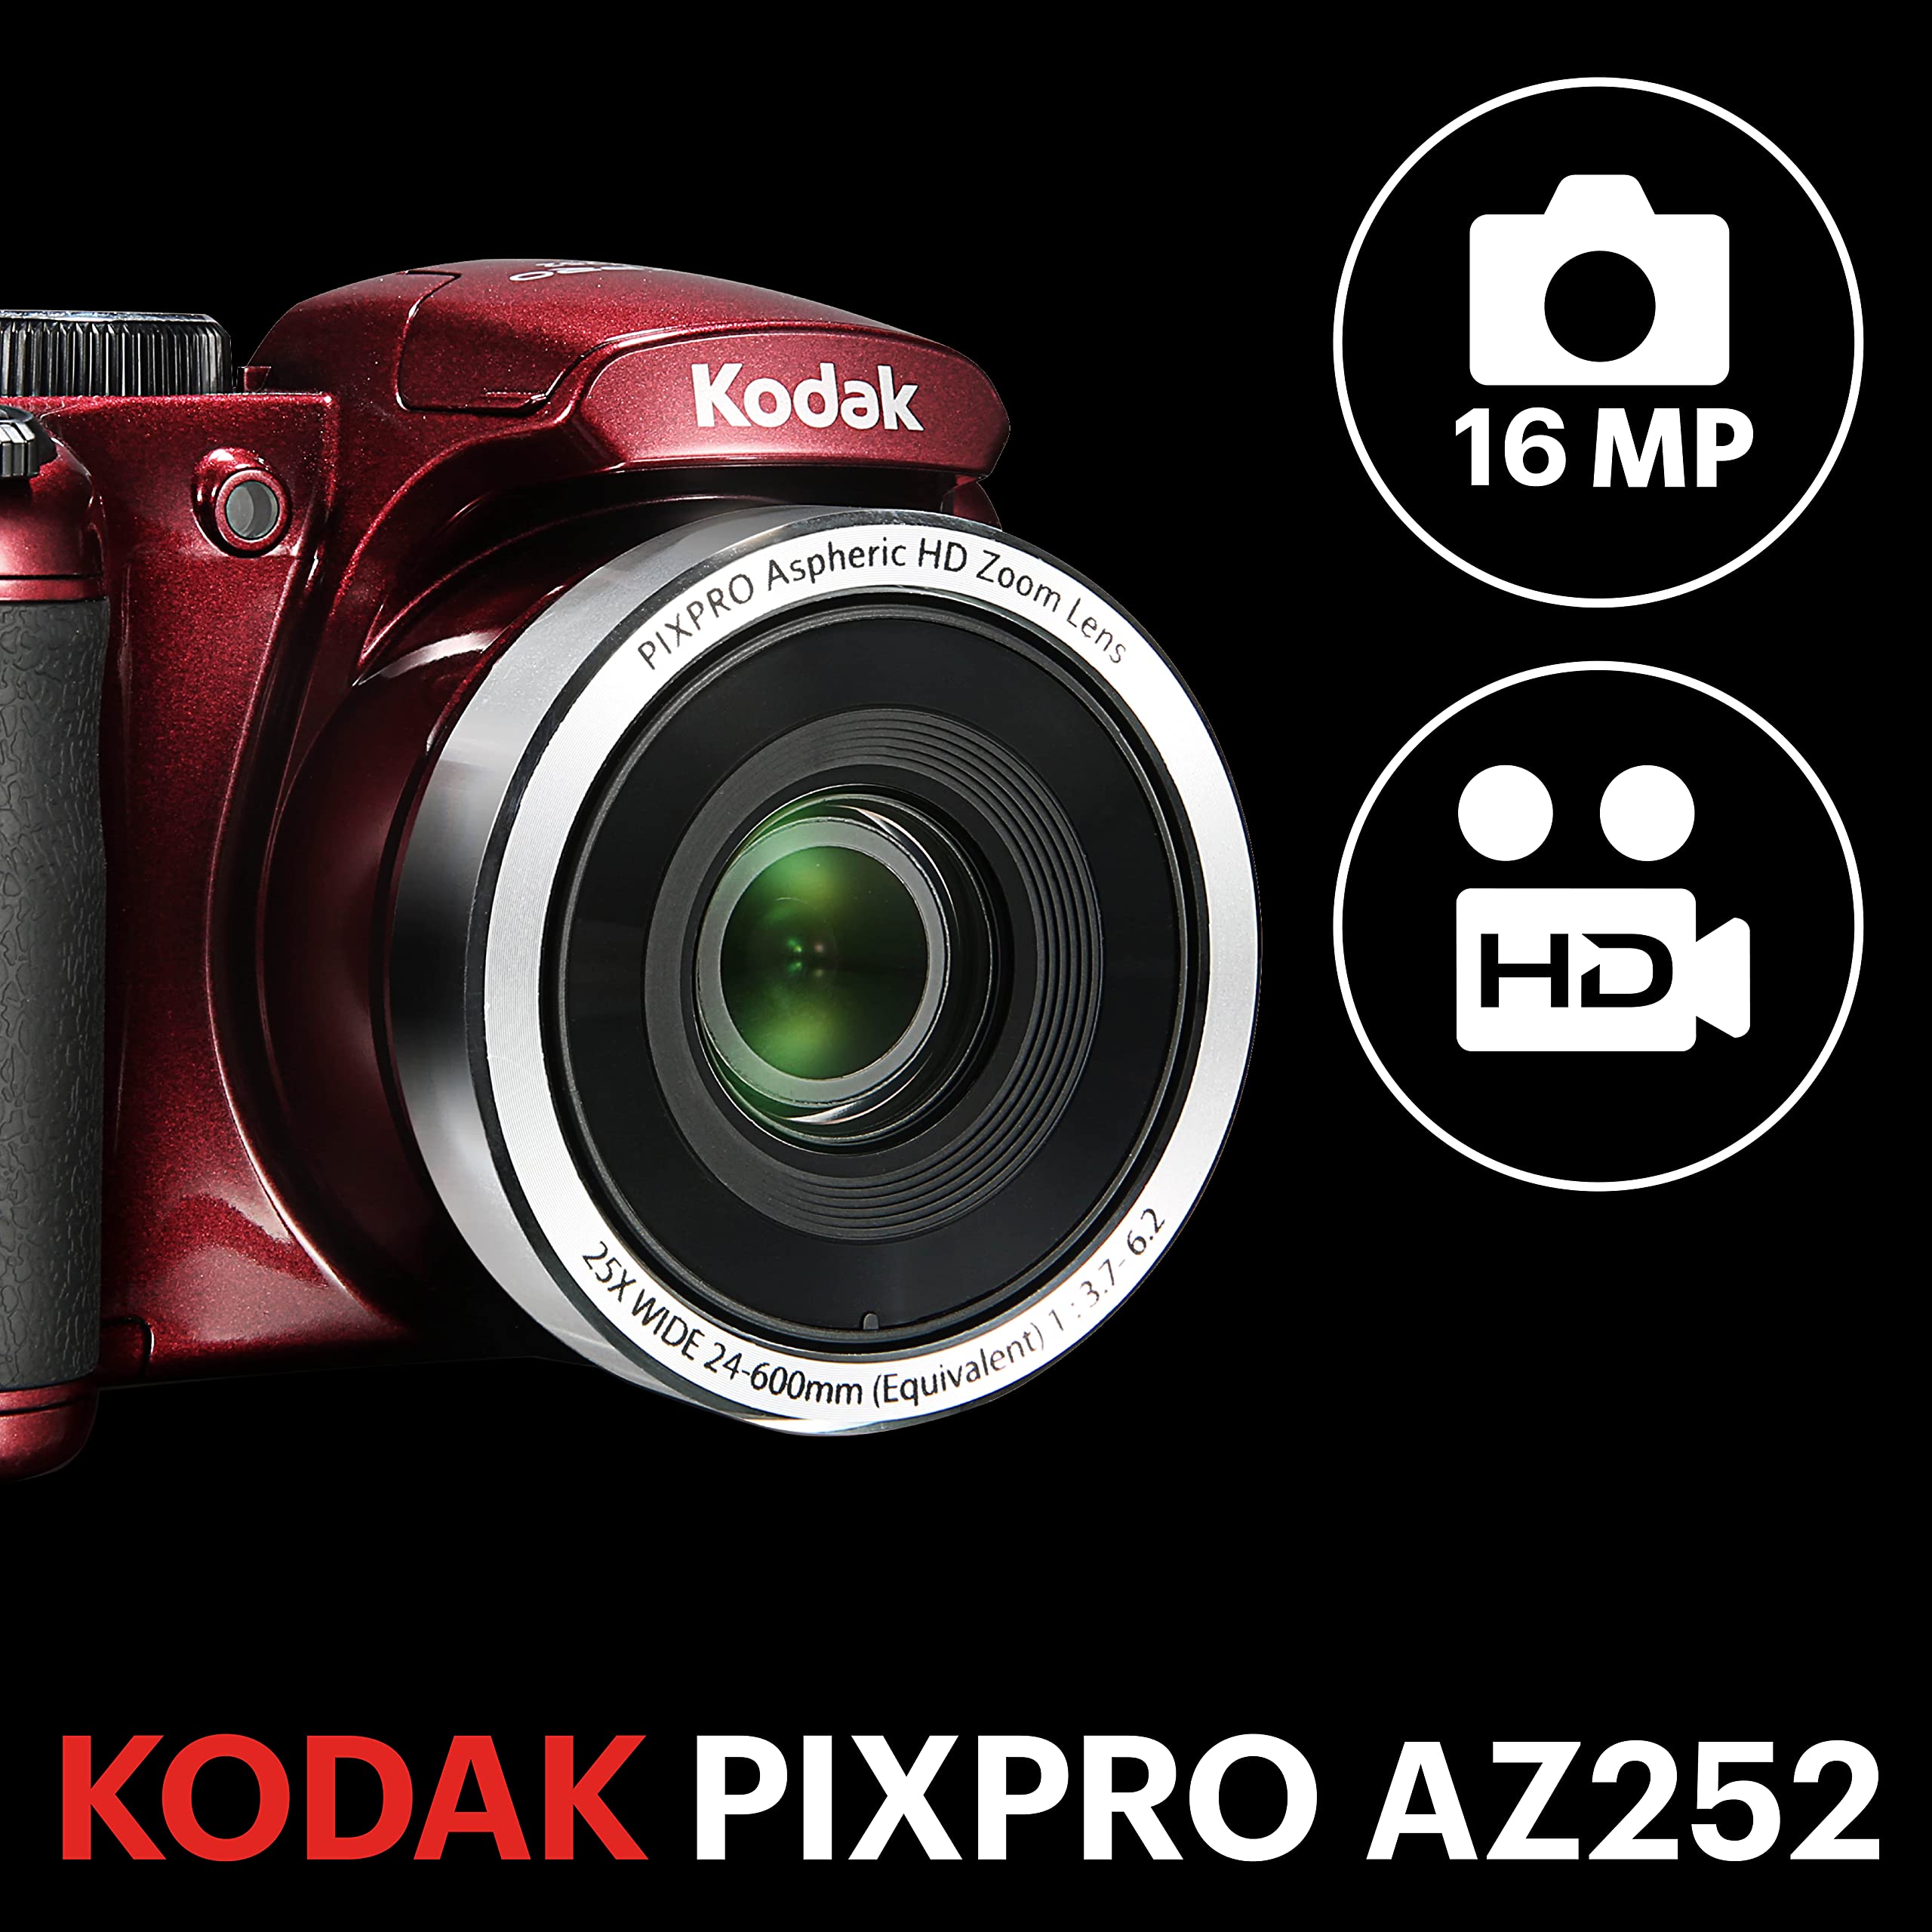 Kodak PIXPRO Astro Zoom AZ252-RD 16MP Digital Camera with 25X Optical Zoom and 3